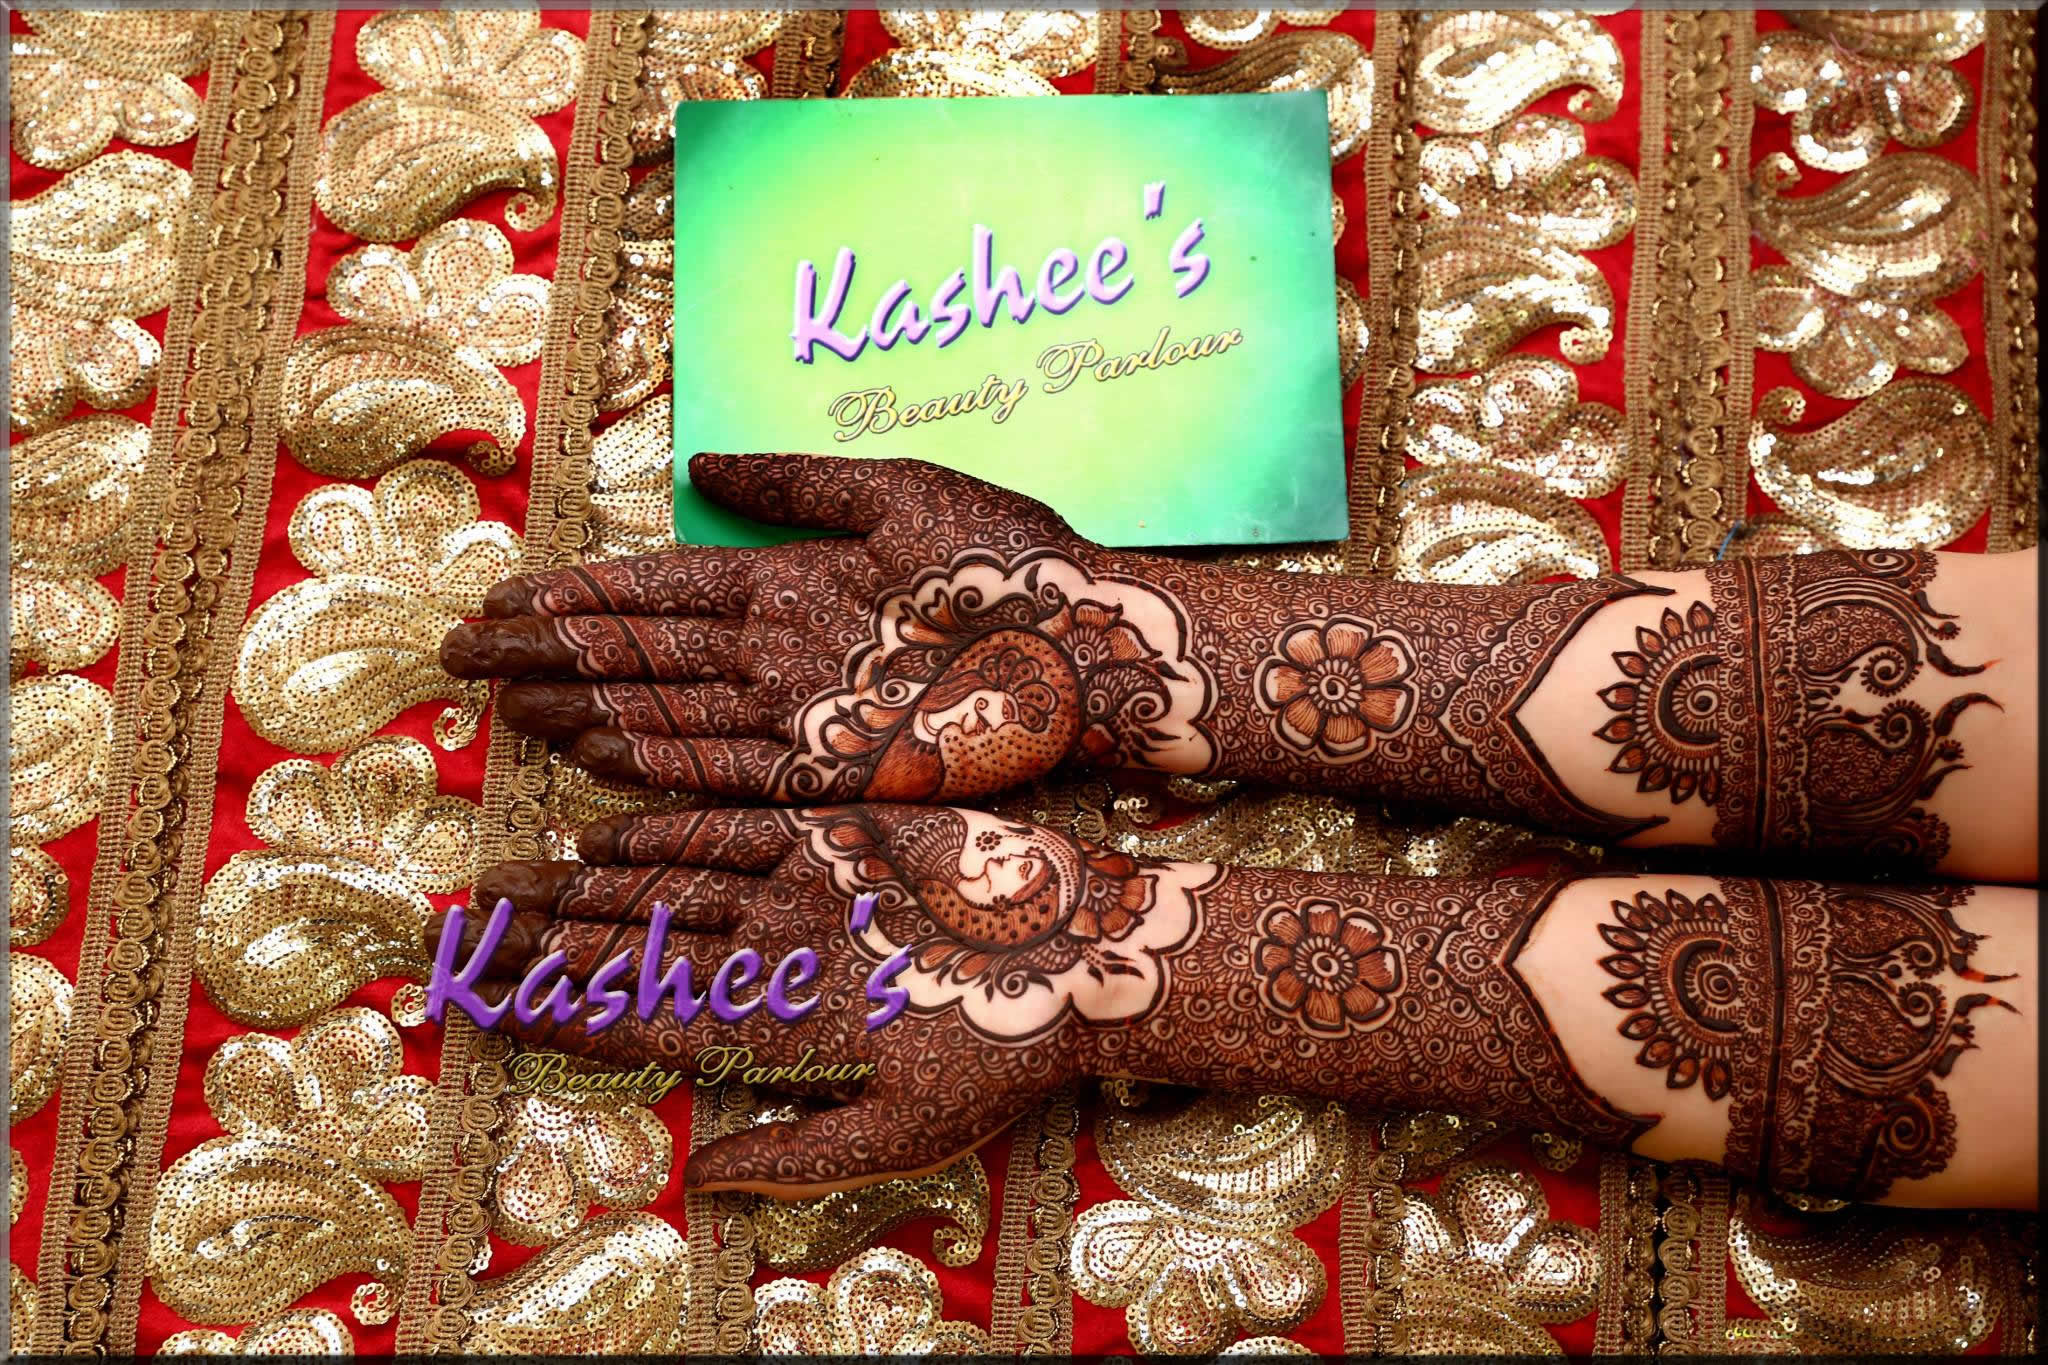 Beautiful bridal mehndi design by kashee 's beauty parlour | Bridal mehndi  designs, Mehndi designs, Bridal mehendi designs hands